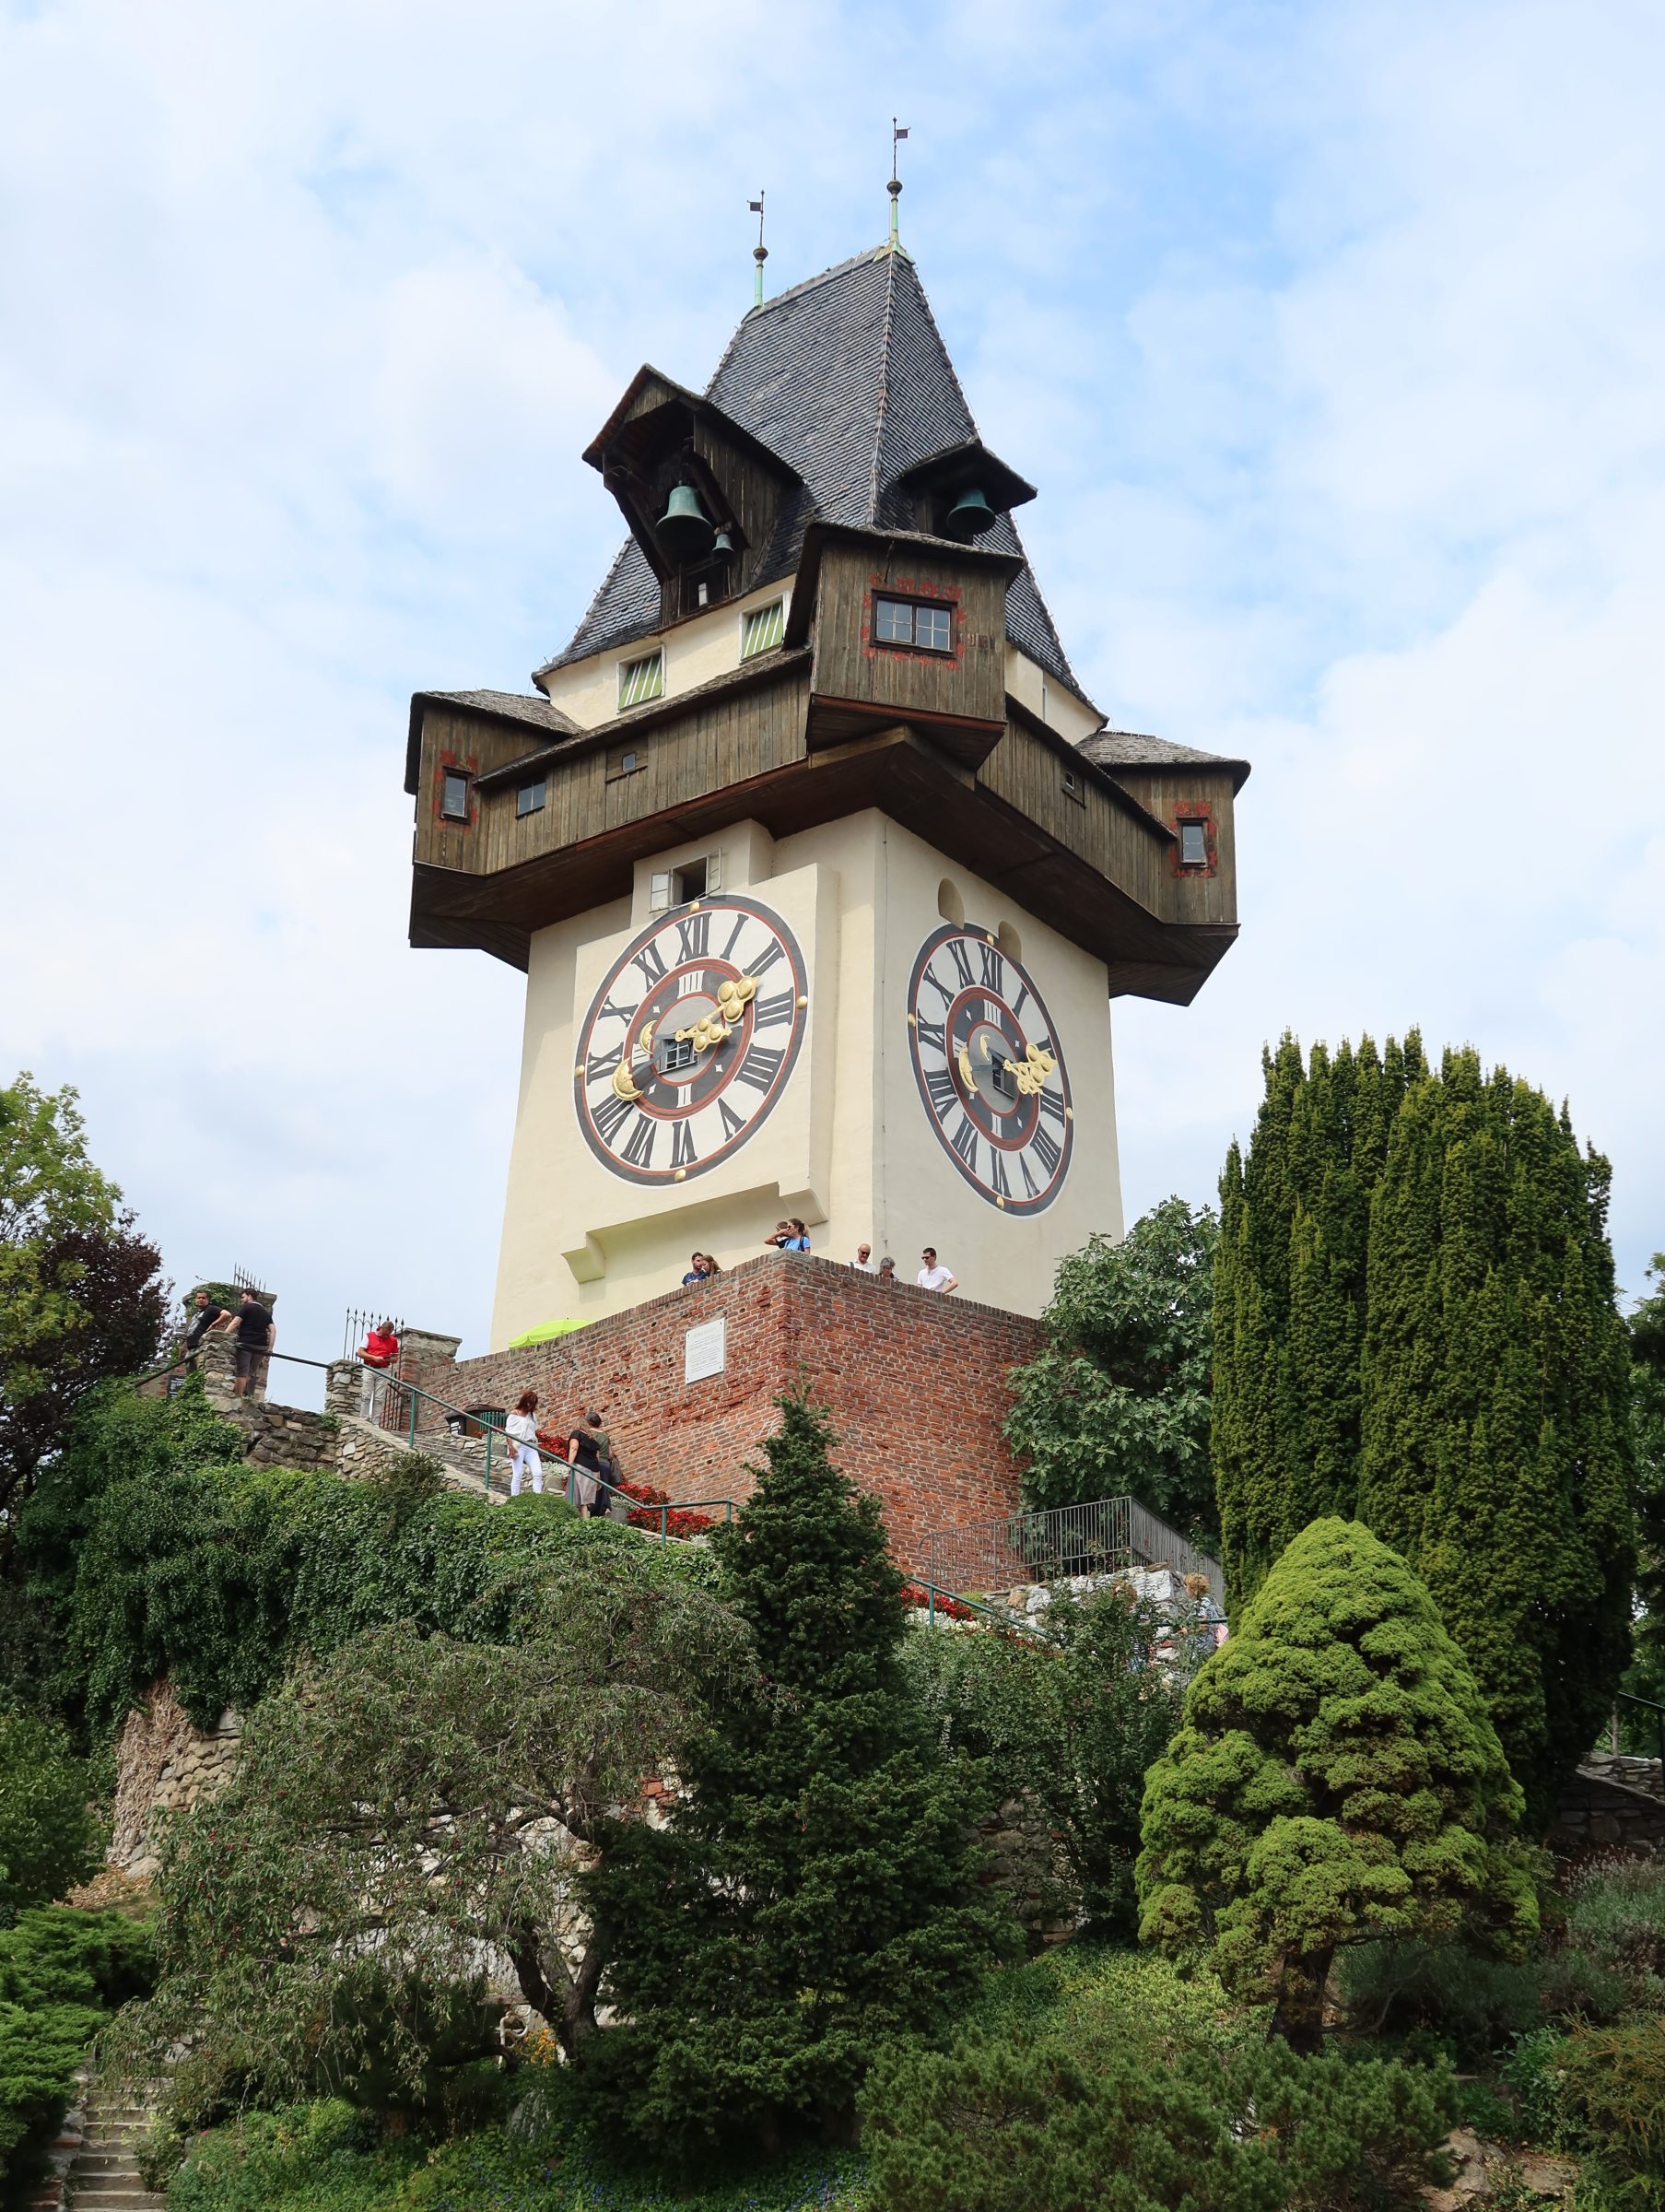 Der Uhrturm der 'Grazer Uhrturm'